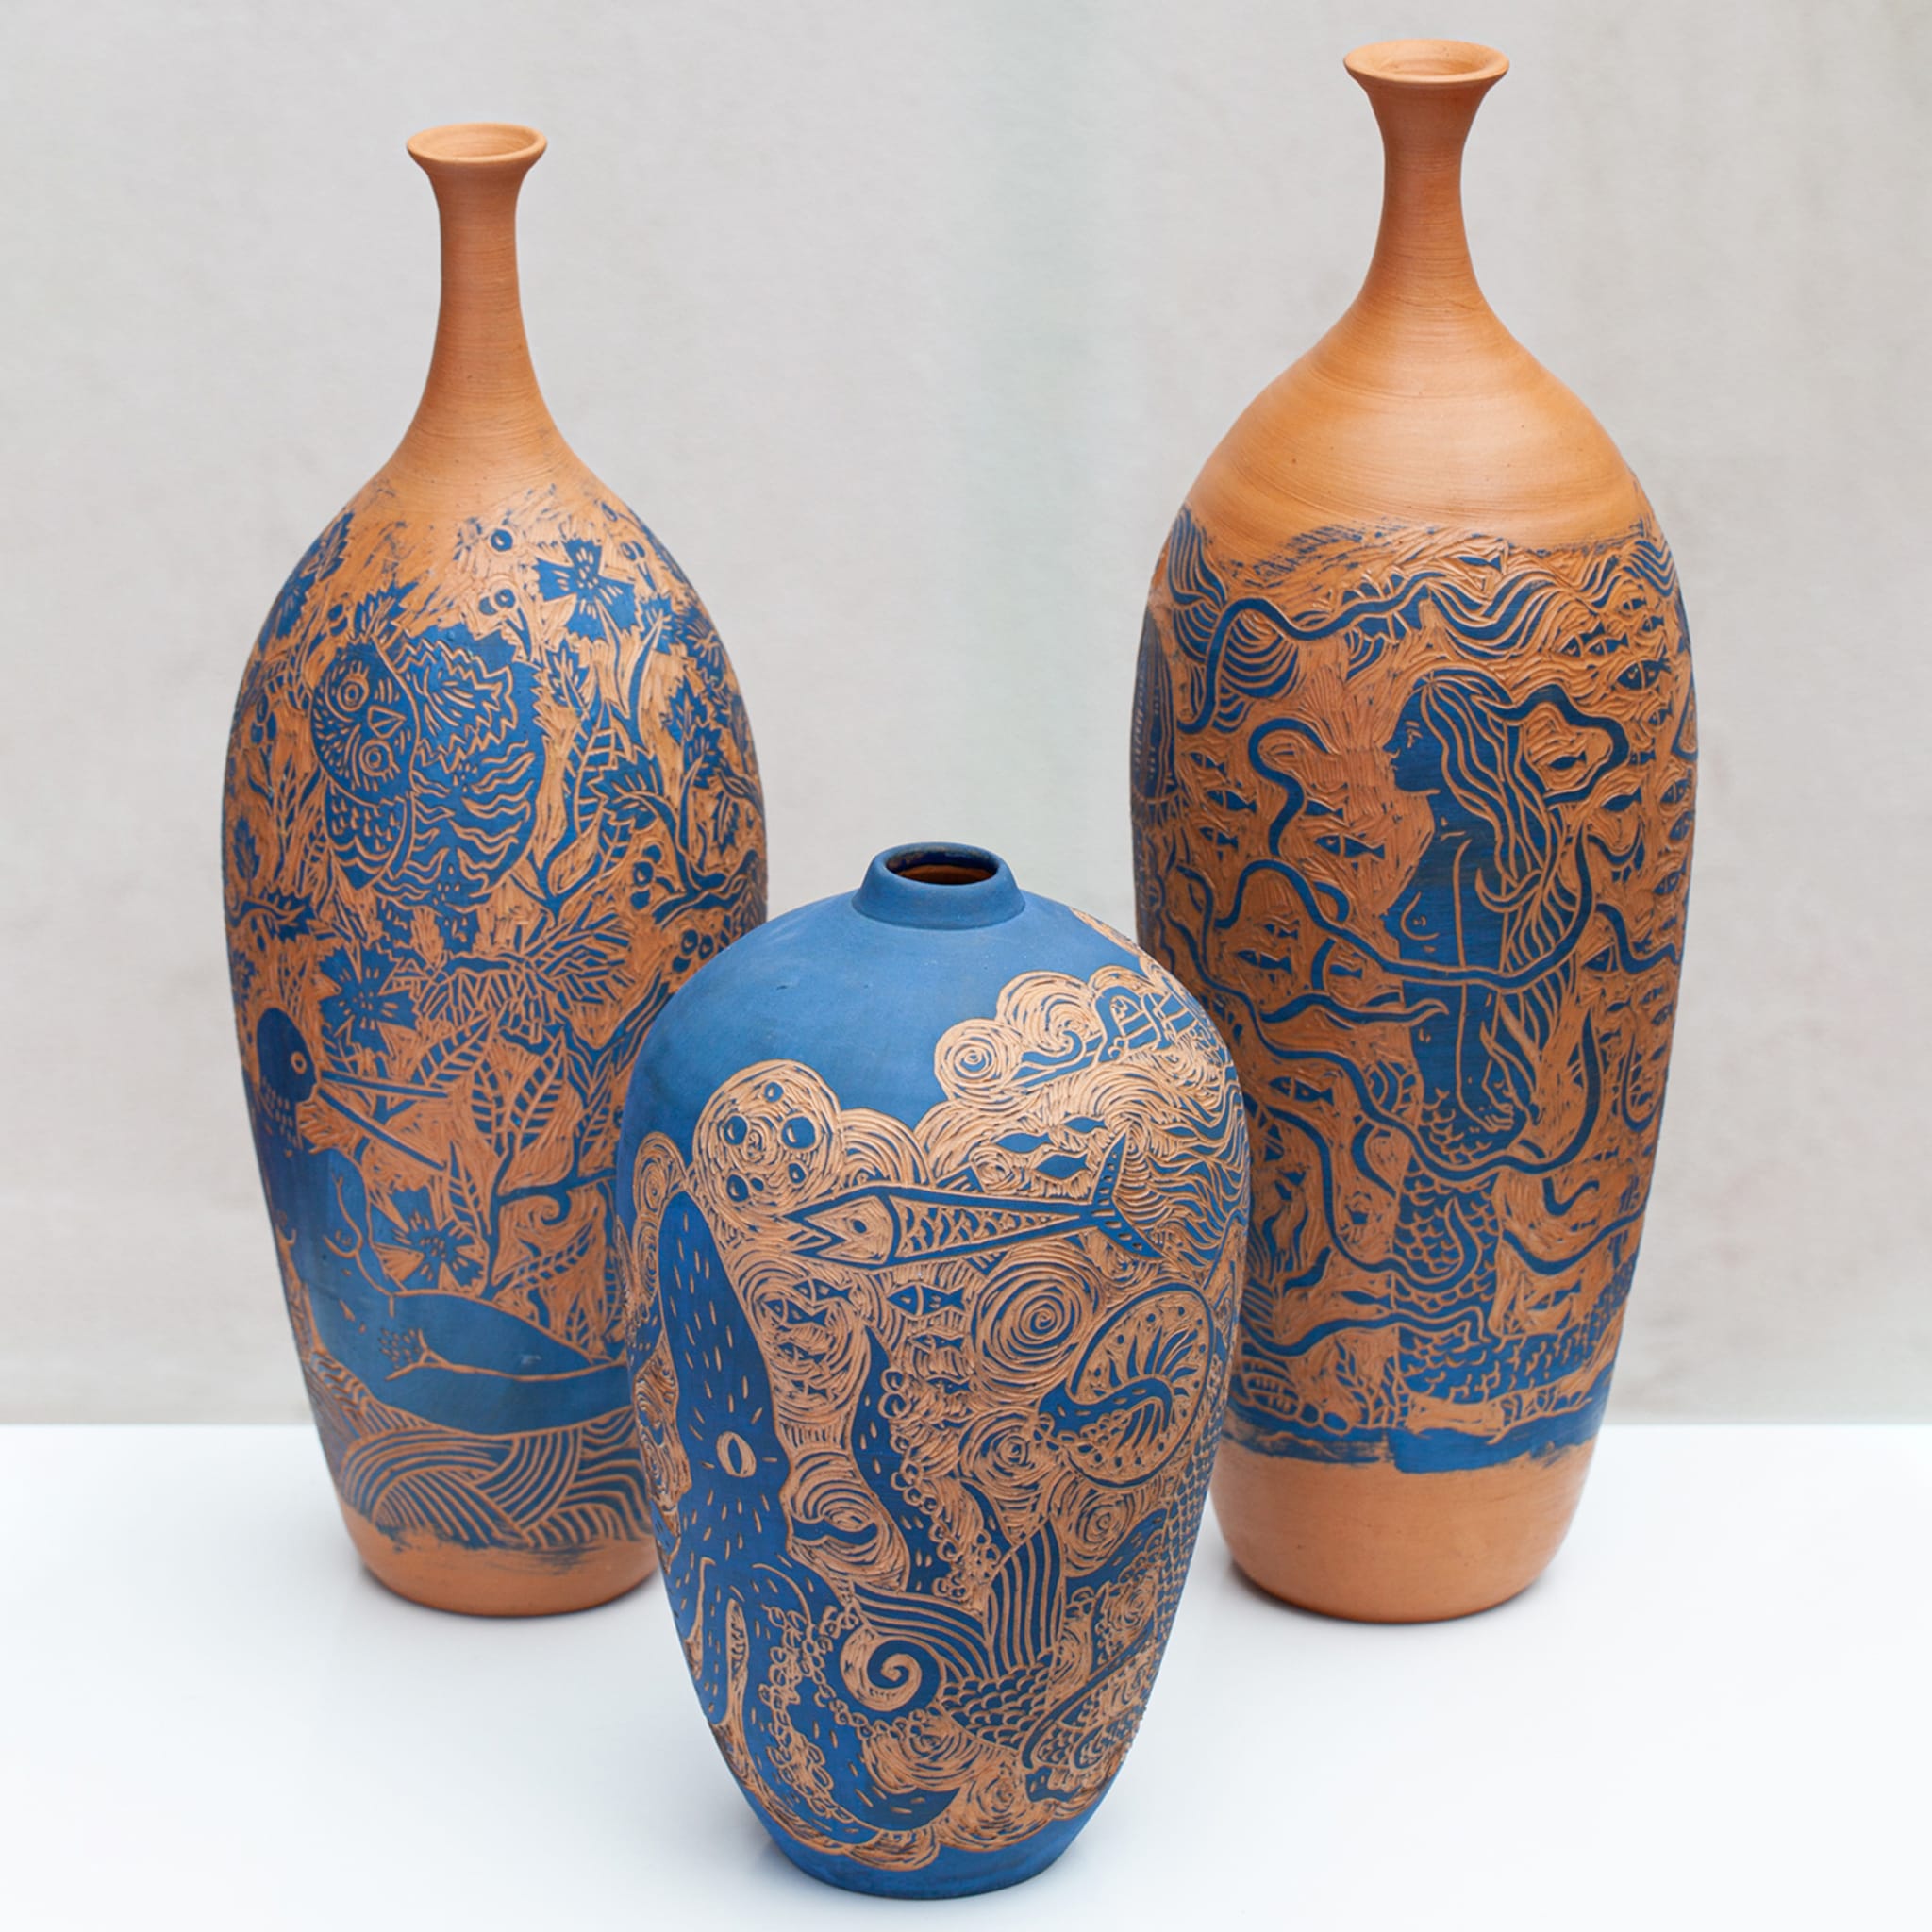 Ipnosi Siren Vase by Clara Holt and Chiara Zoppei - Alternative view 4